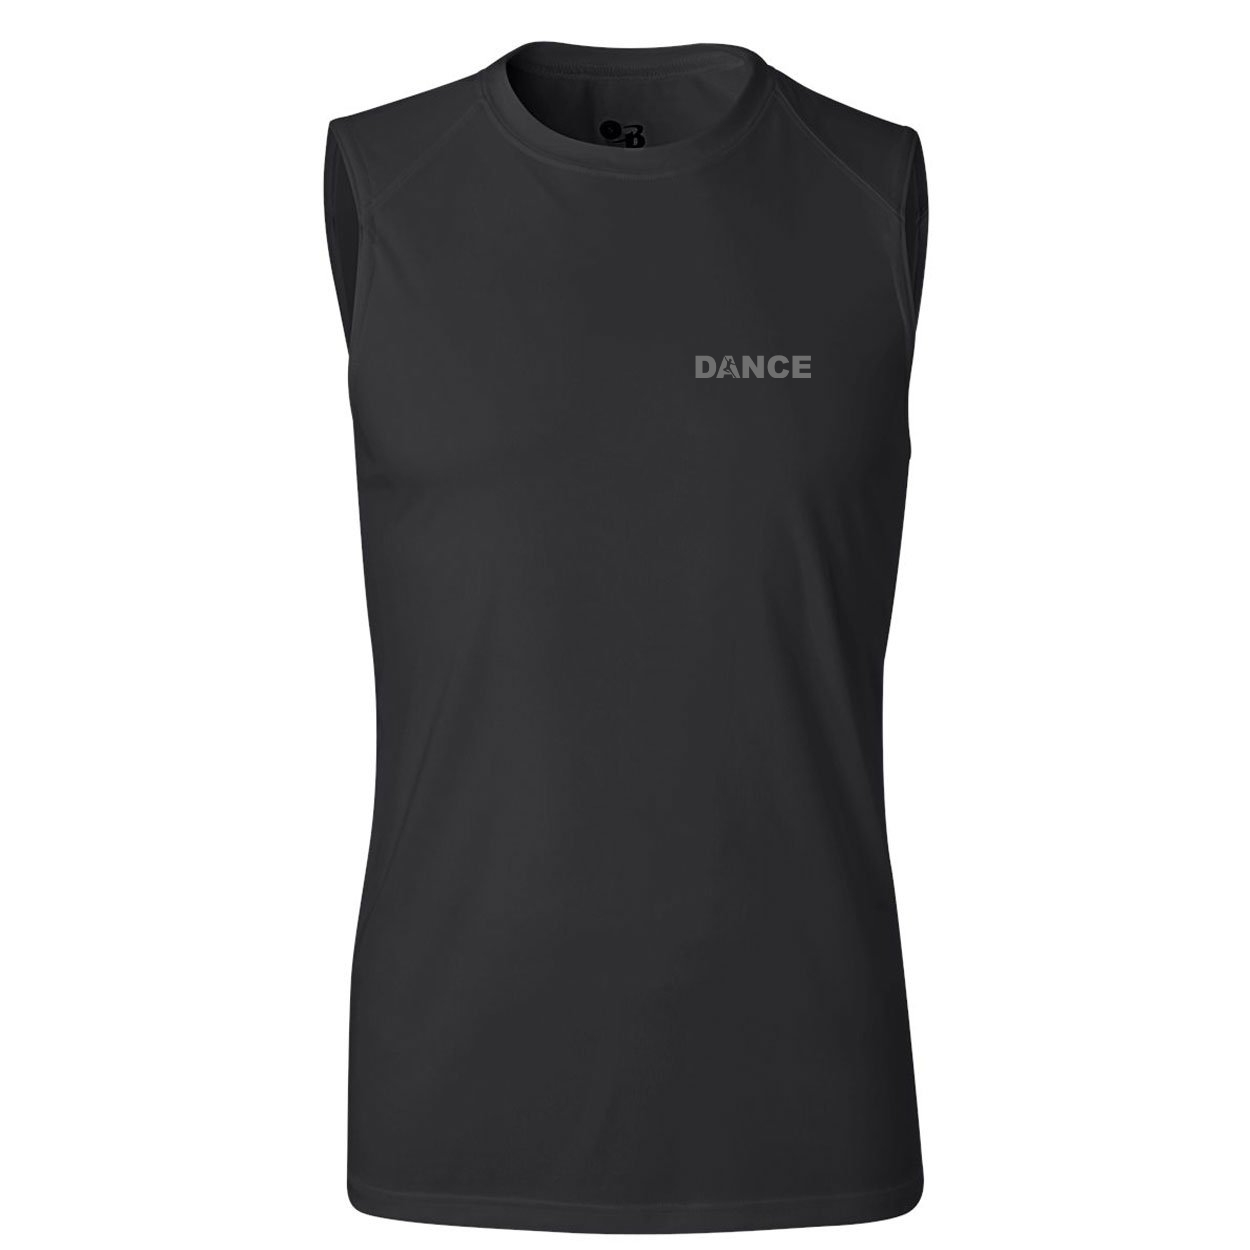 Dance Silhouette Logo Night Out Unisex Performance Sleeveless T-Shirt Black (Gray Logo)